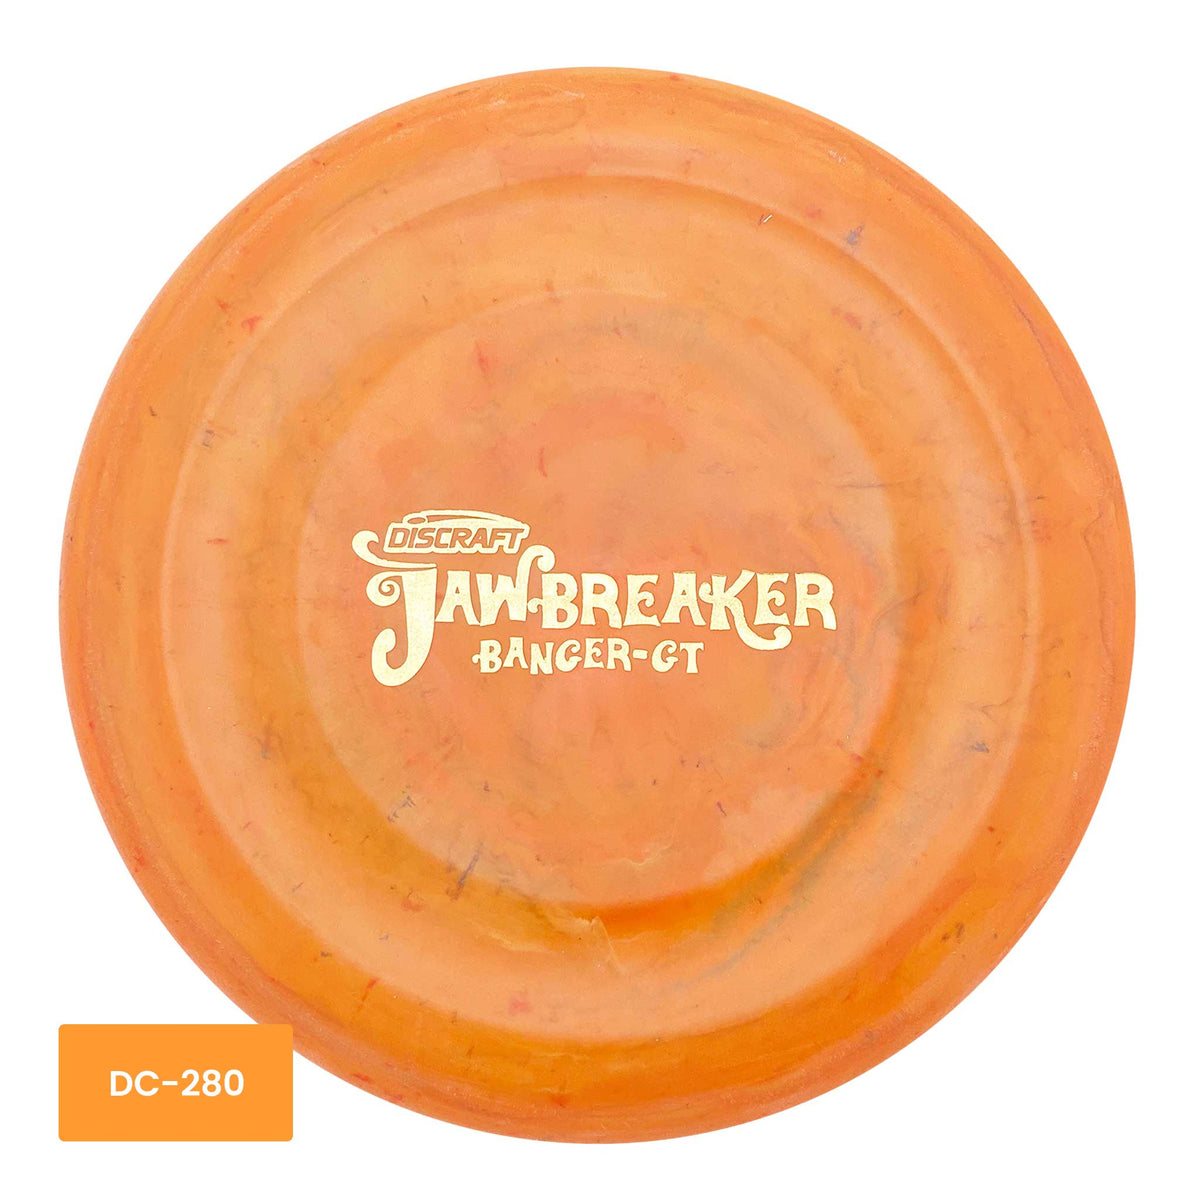 Discraft Jawbreaker Banger-GT putter - Orange